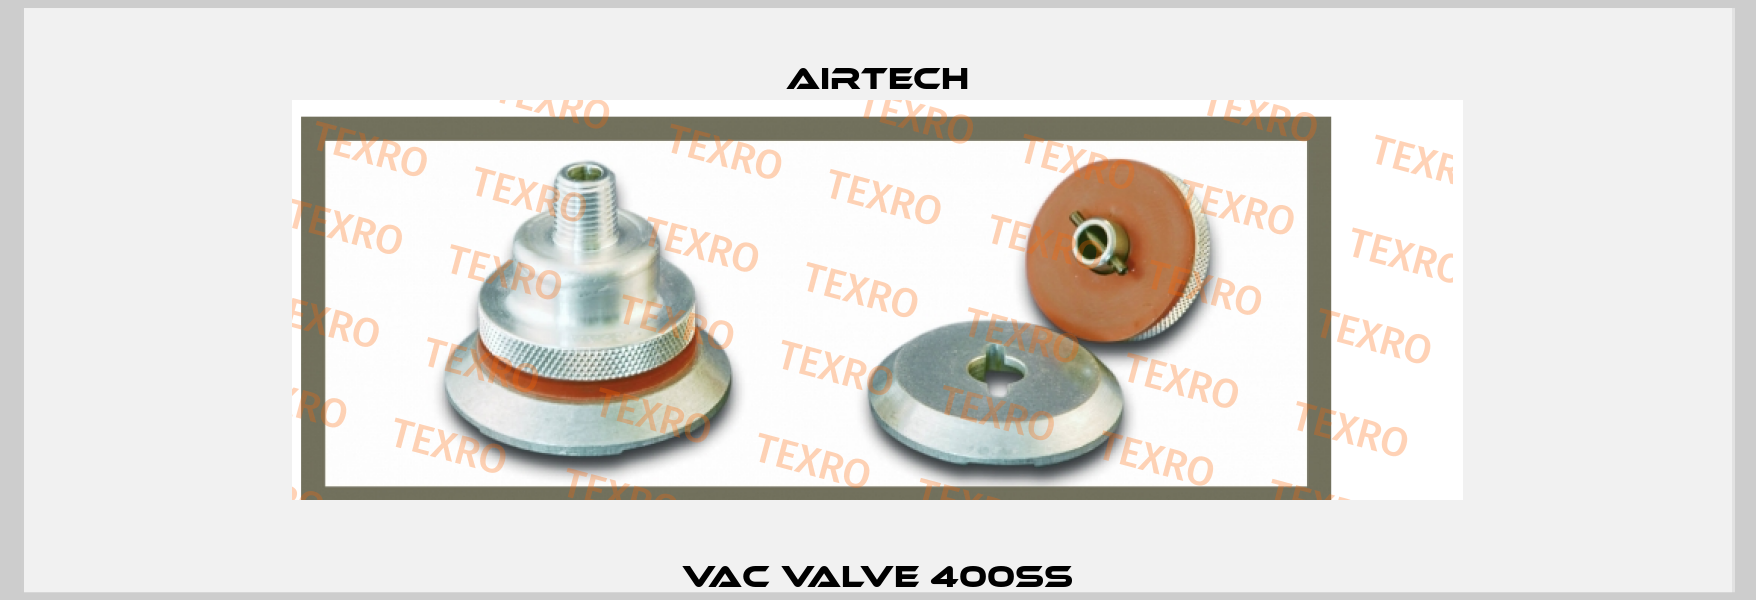 Vac Valve 400SS Airtech